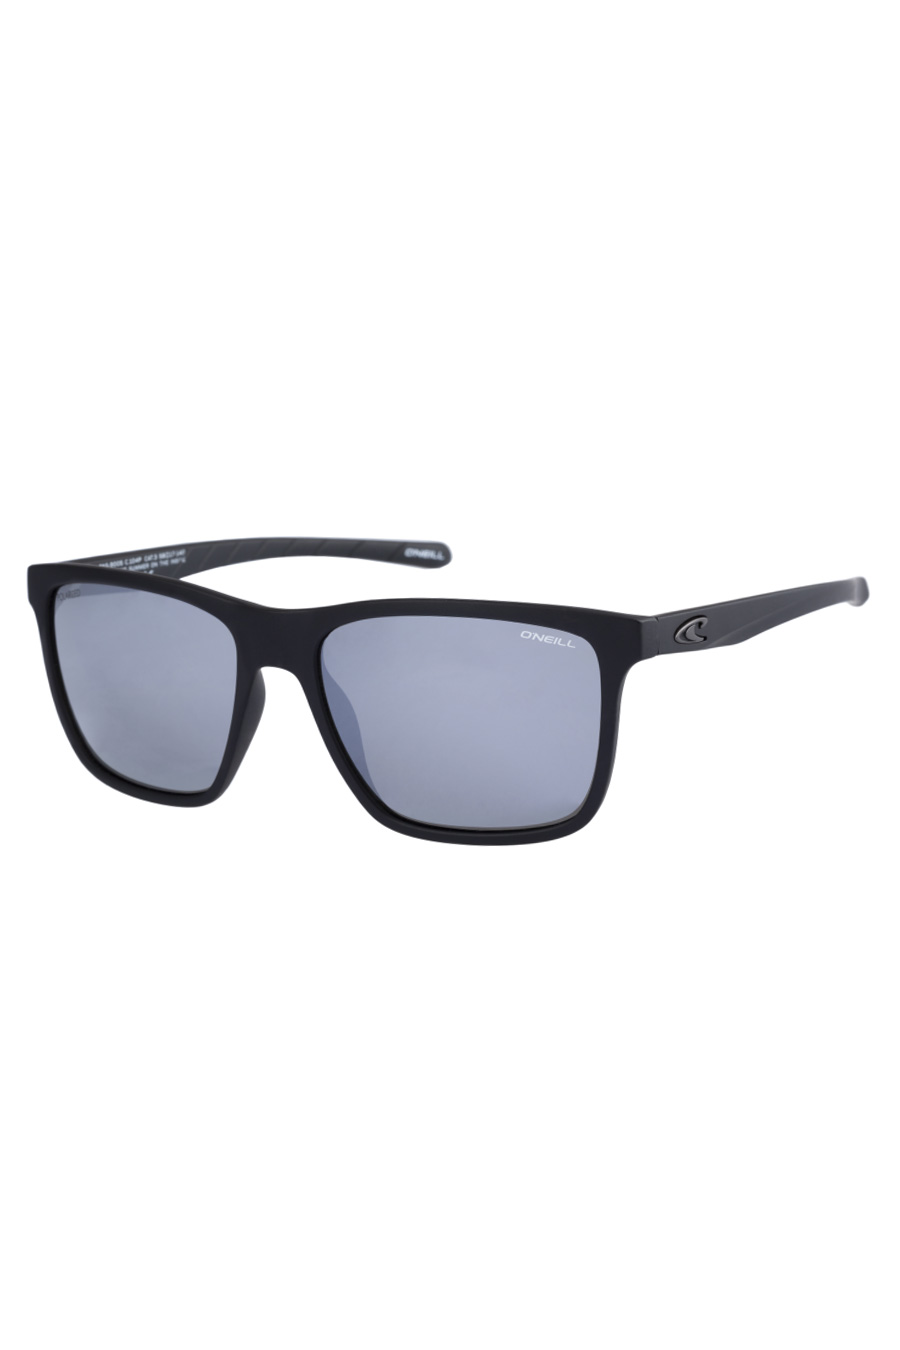 Sunglasses ONEILL ONS-9005-20-104P